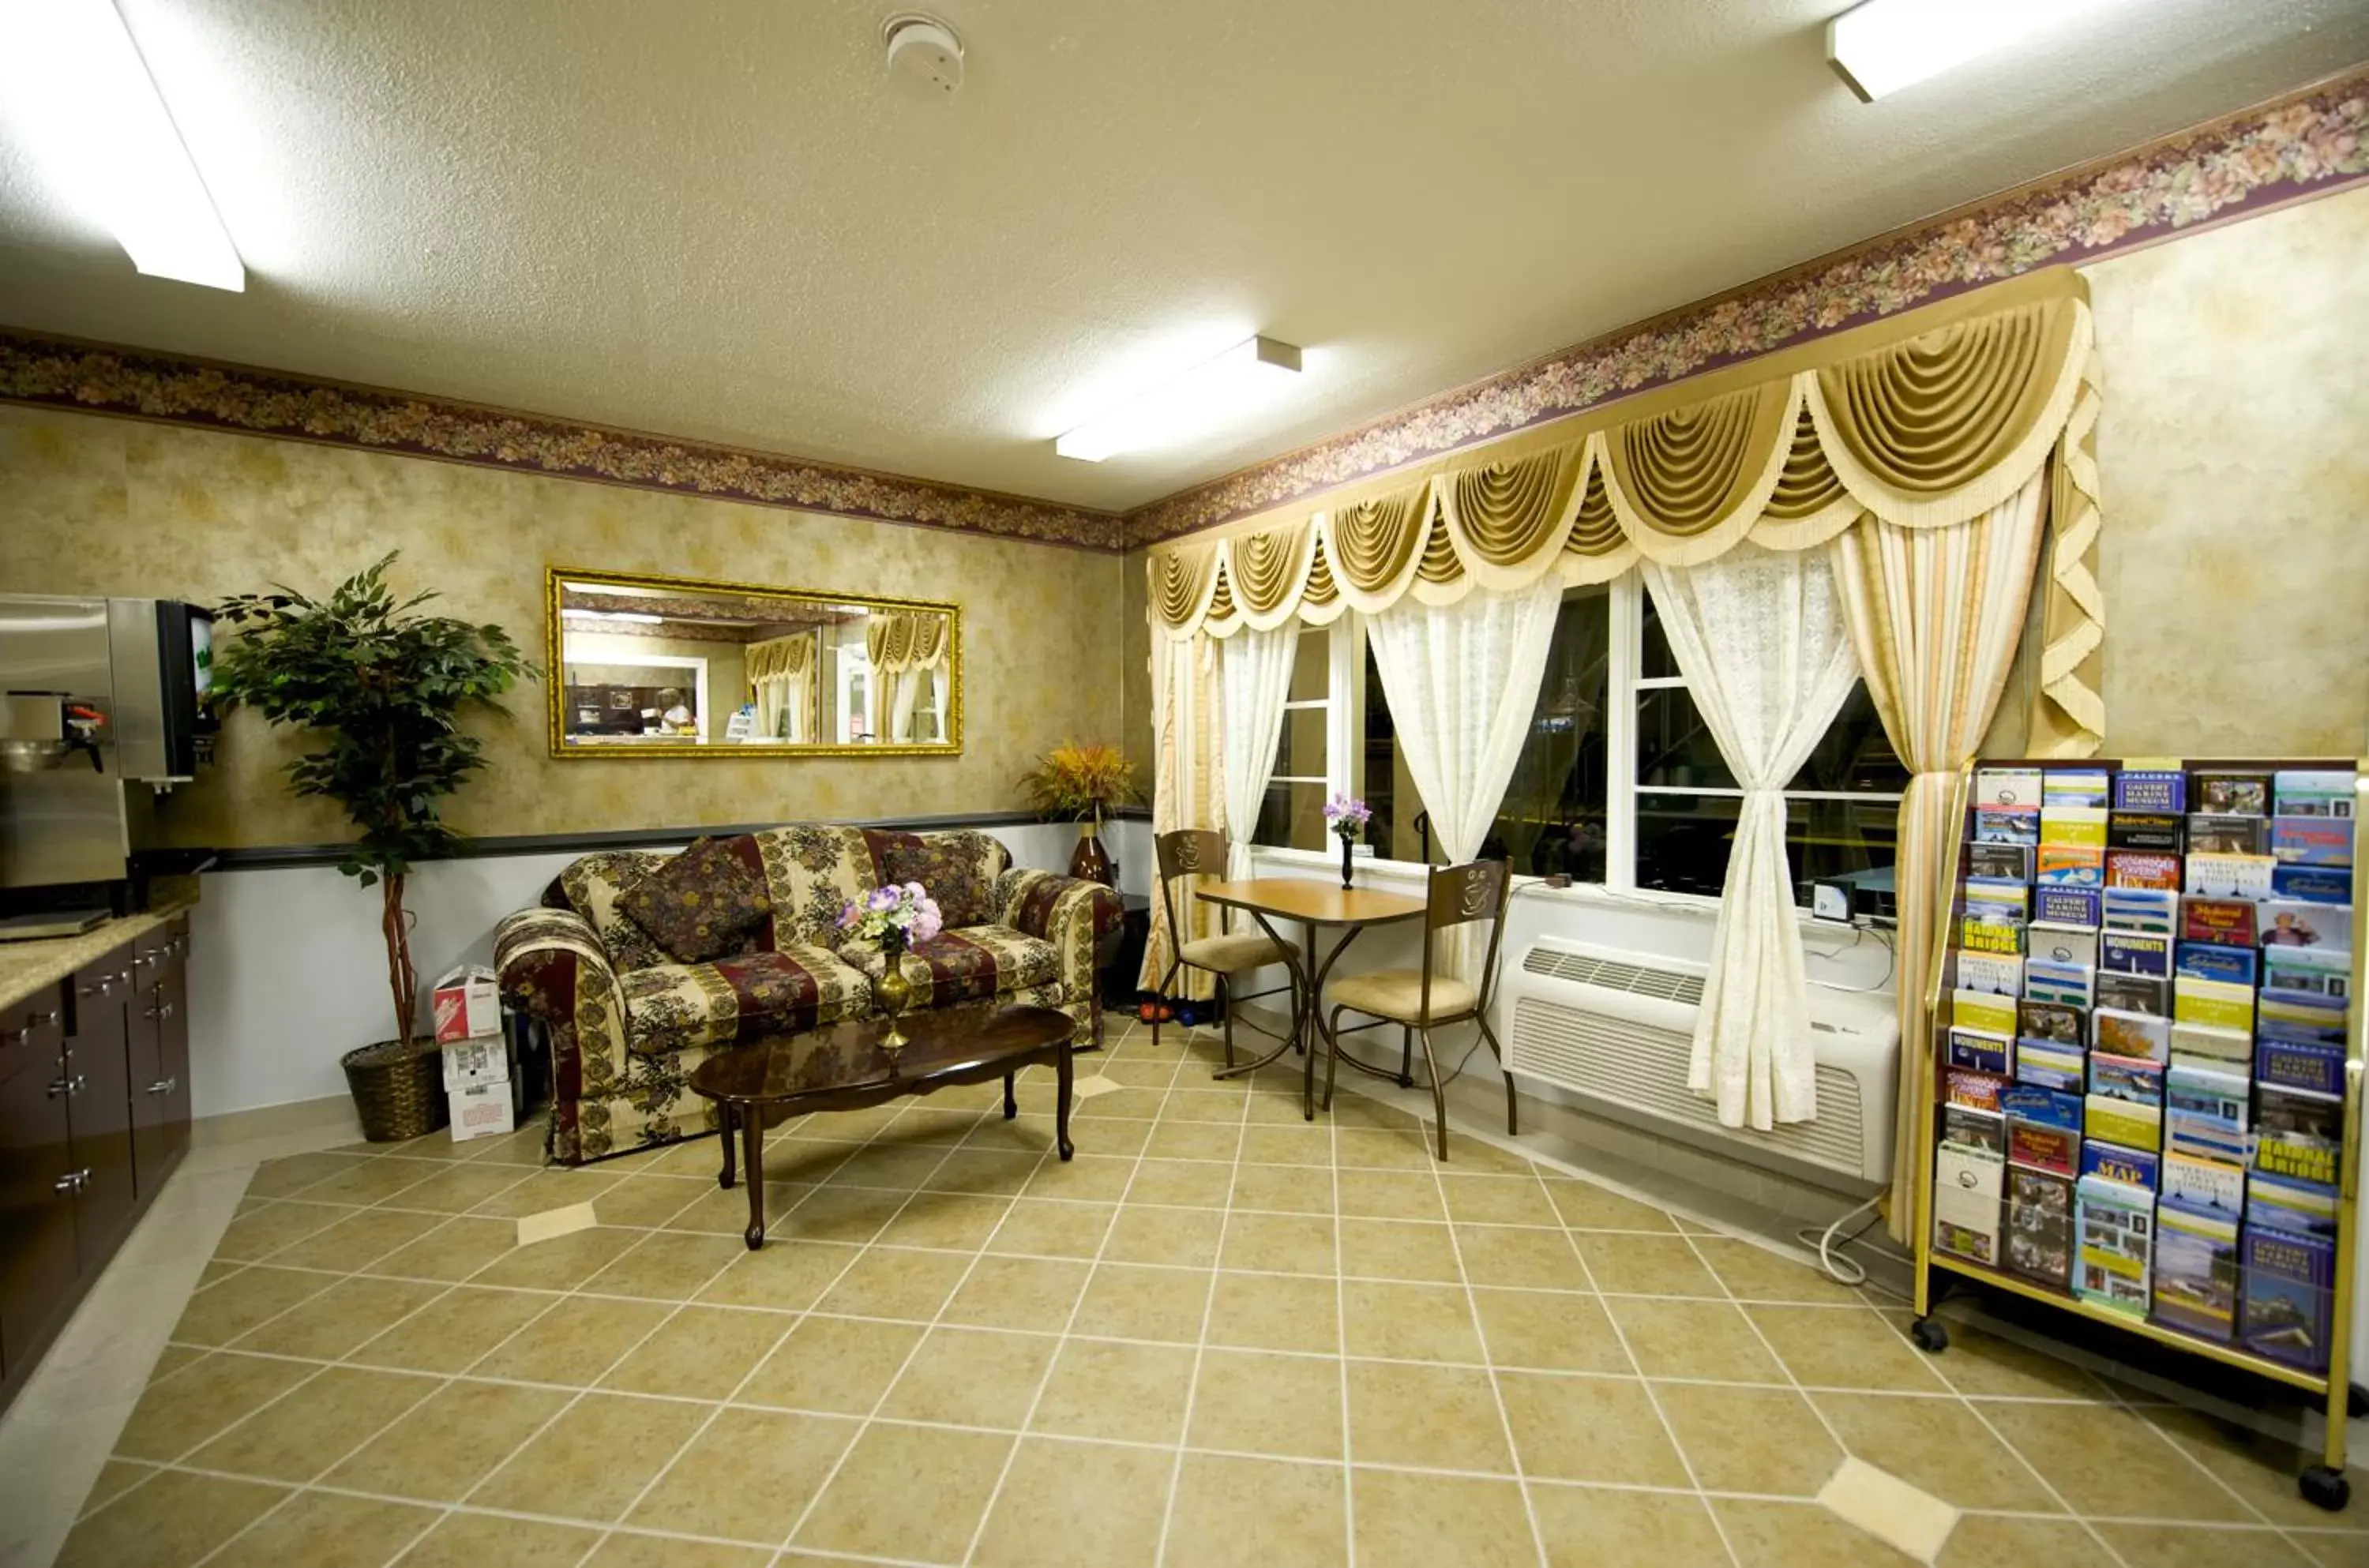 Lobby or reception in Executive Inn & Suites Upper Marlboro